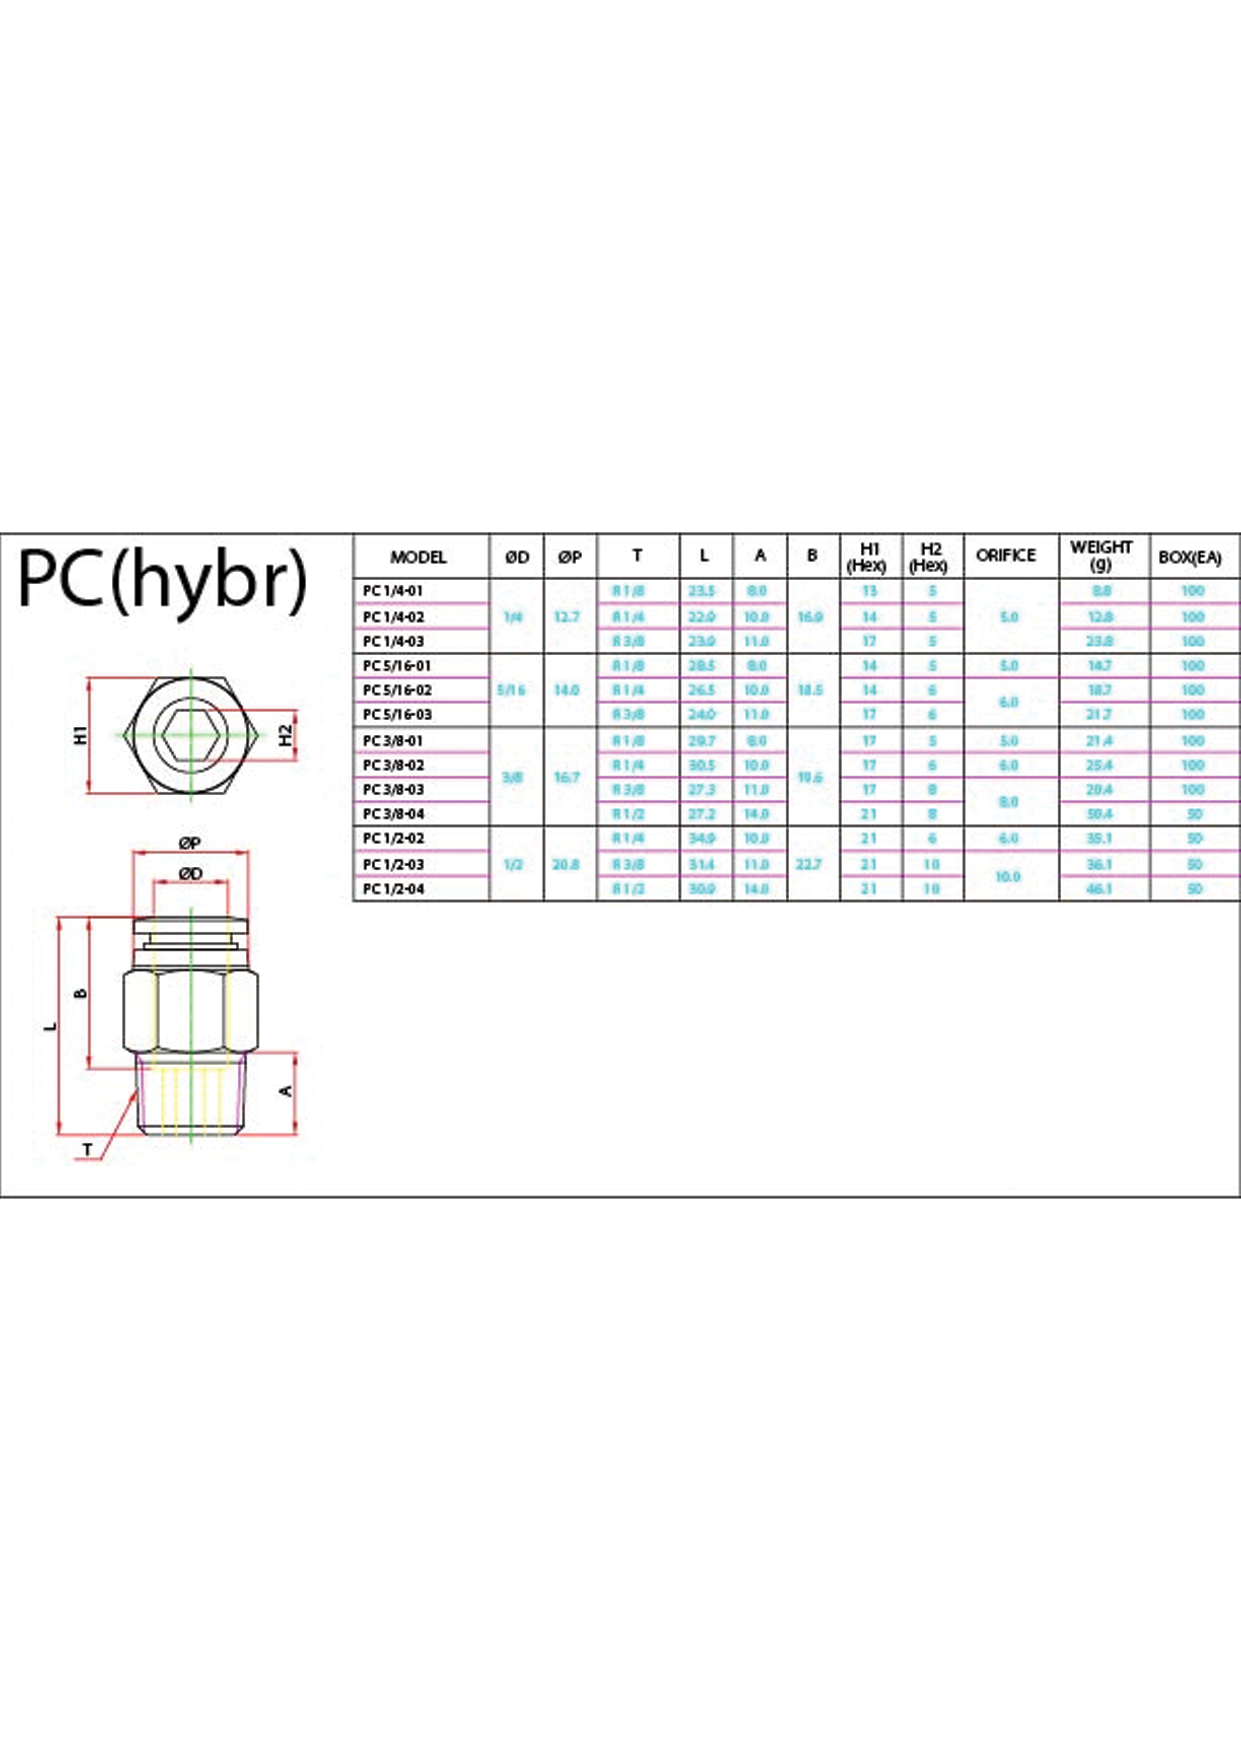 PC (Hybr) Data Sheet ( 107 KB )